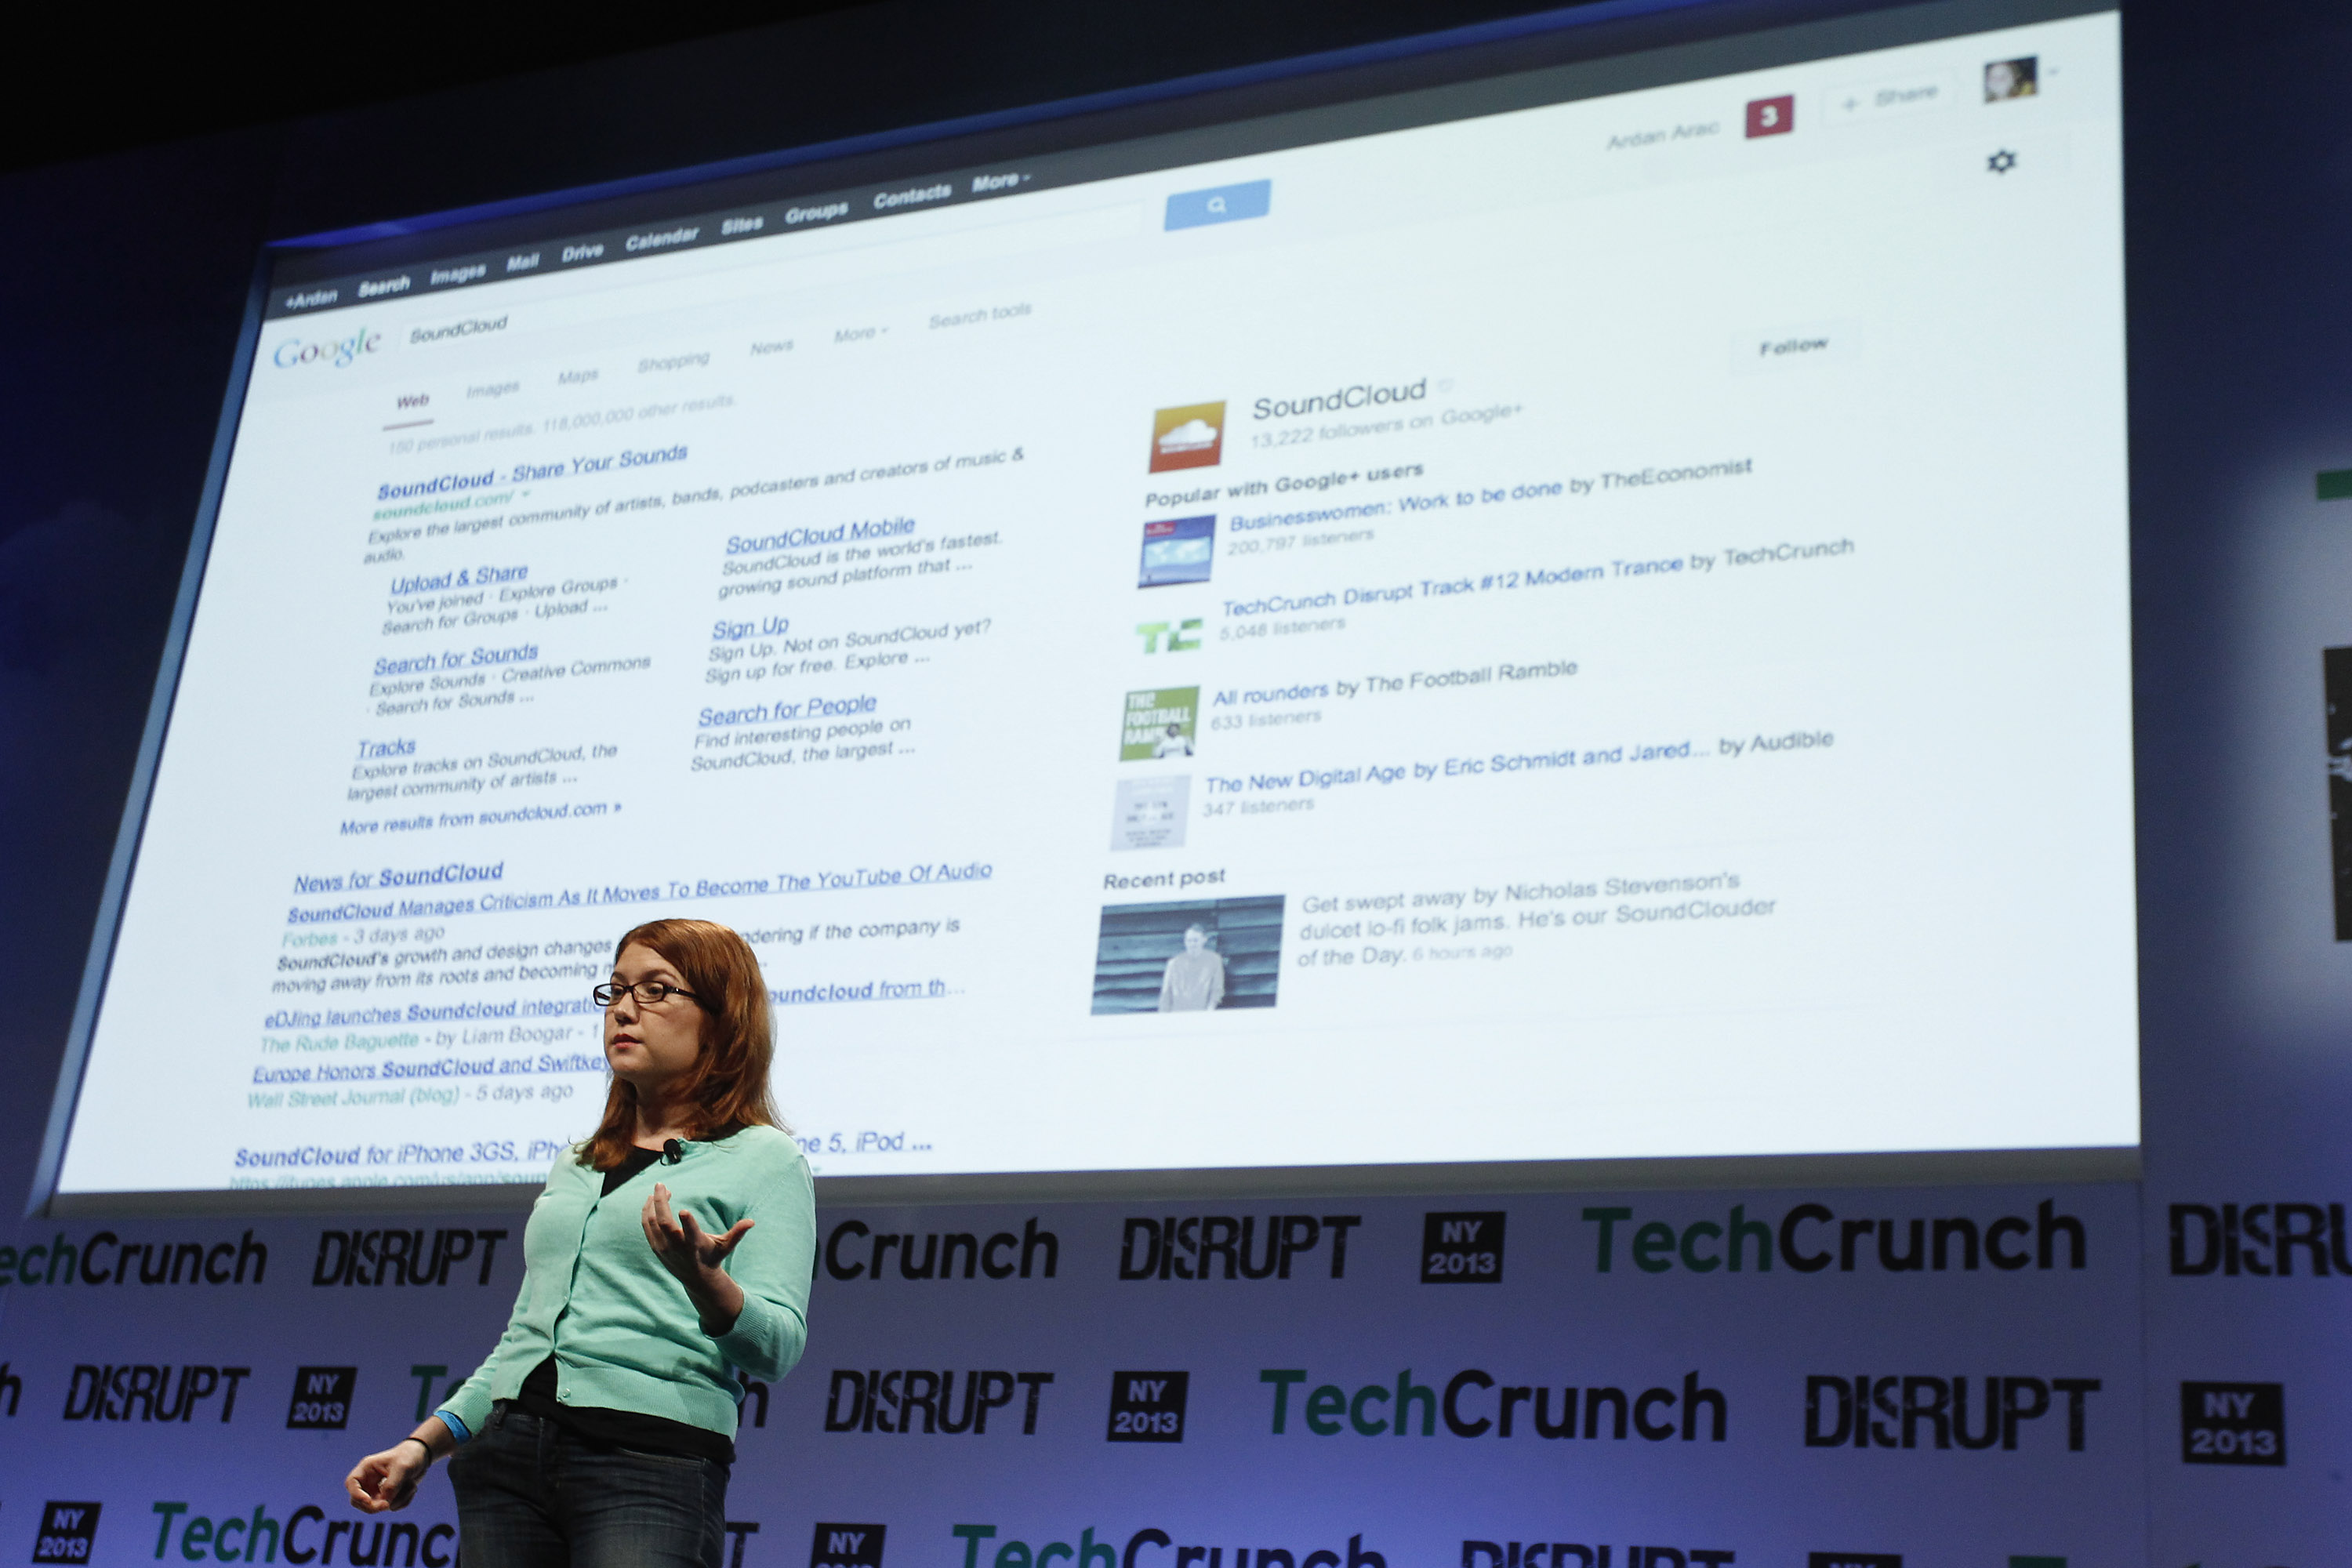 TechCrunch Disrupt NY 2013 - Day 2